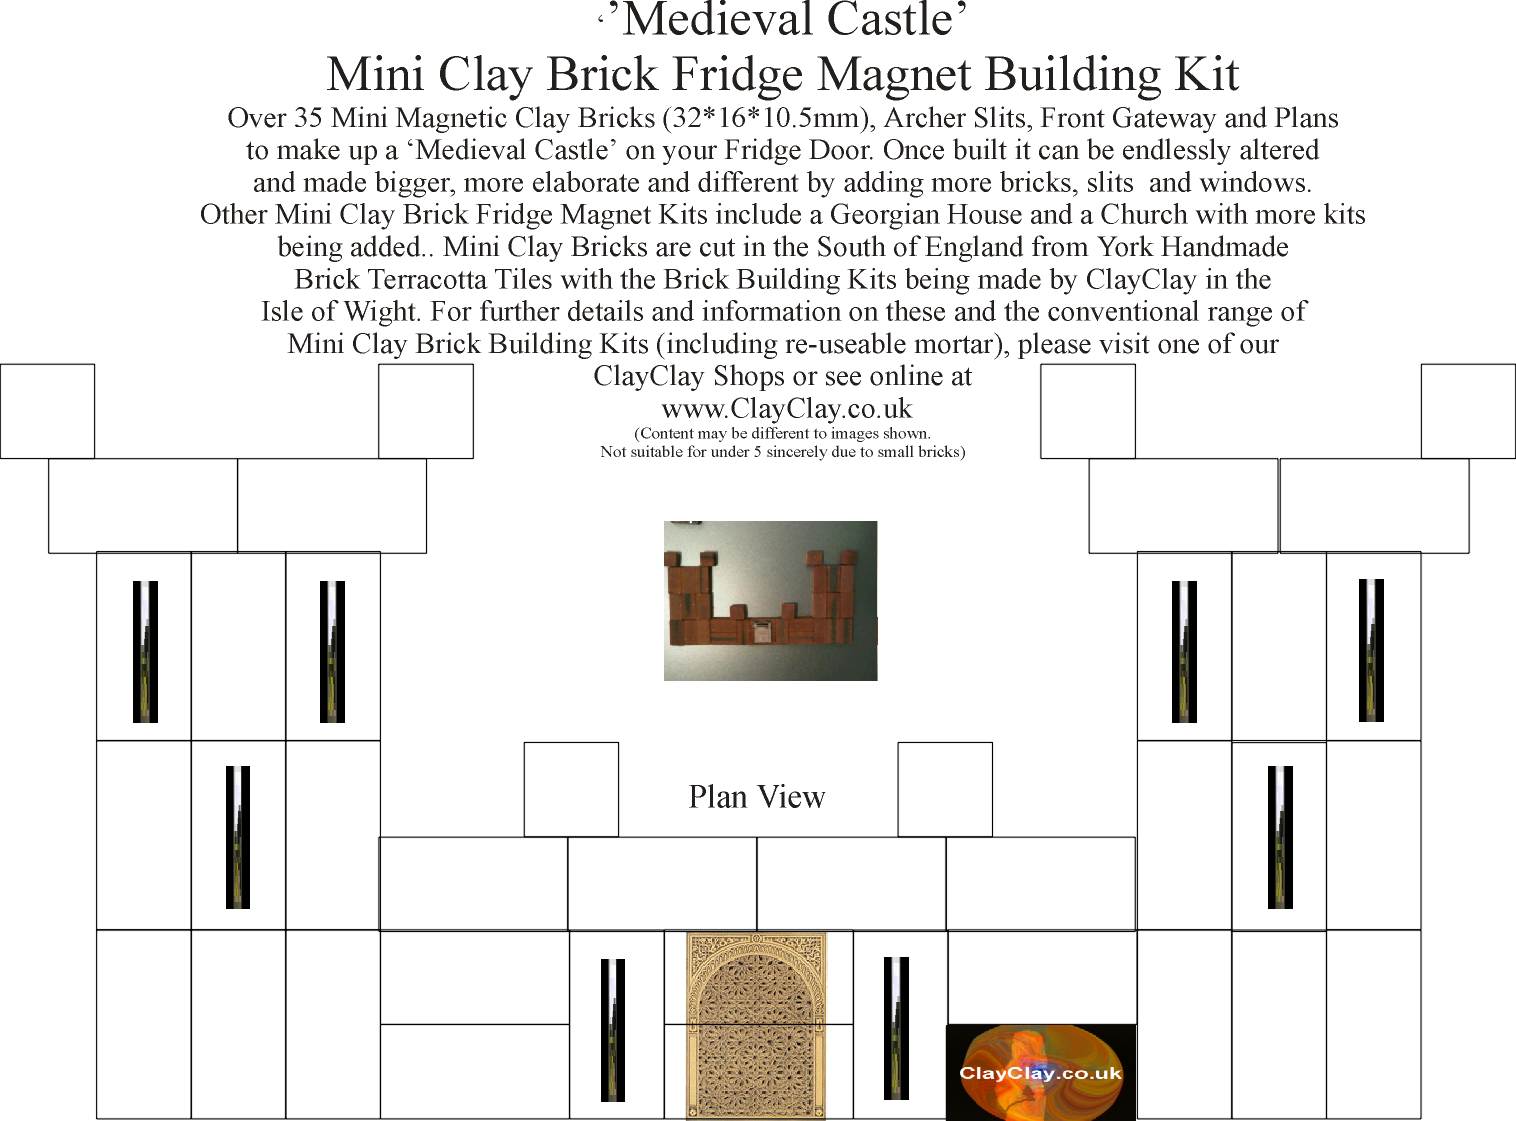 Clay Clay Miniature Brick Fridge Magnets. Medieval Castle Kit. Over 35 bricks and windows etc